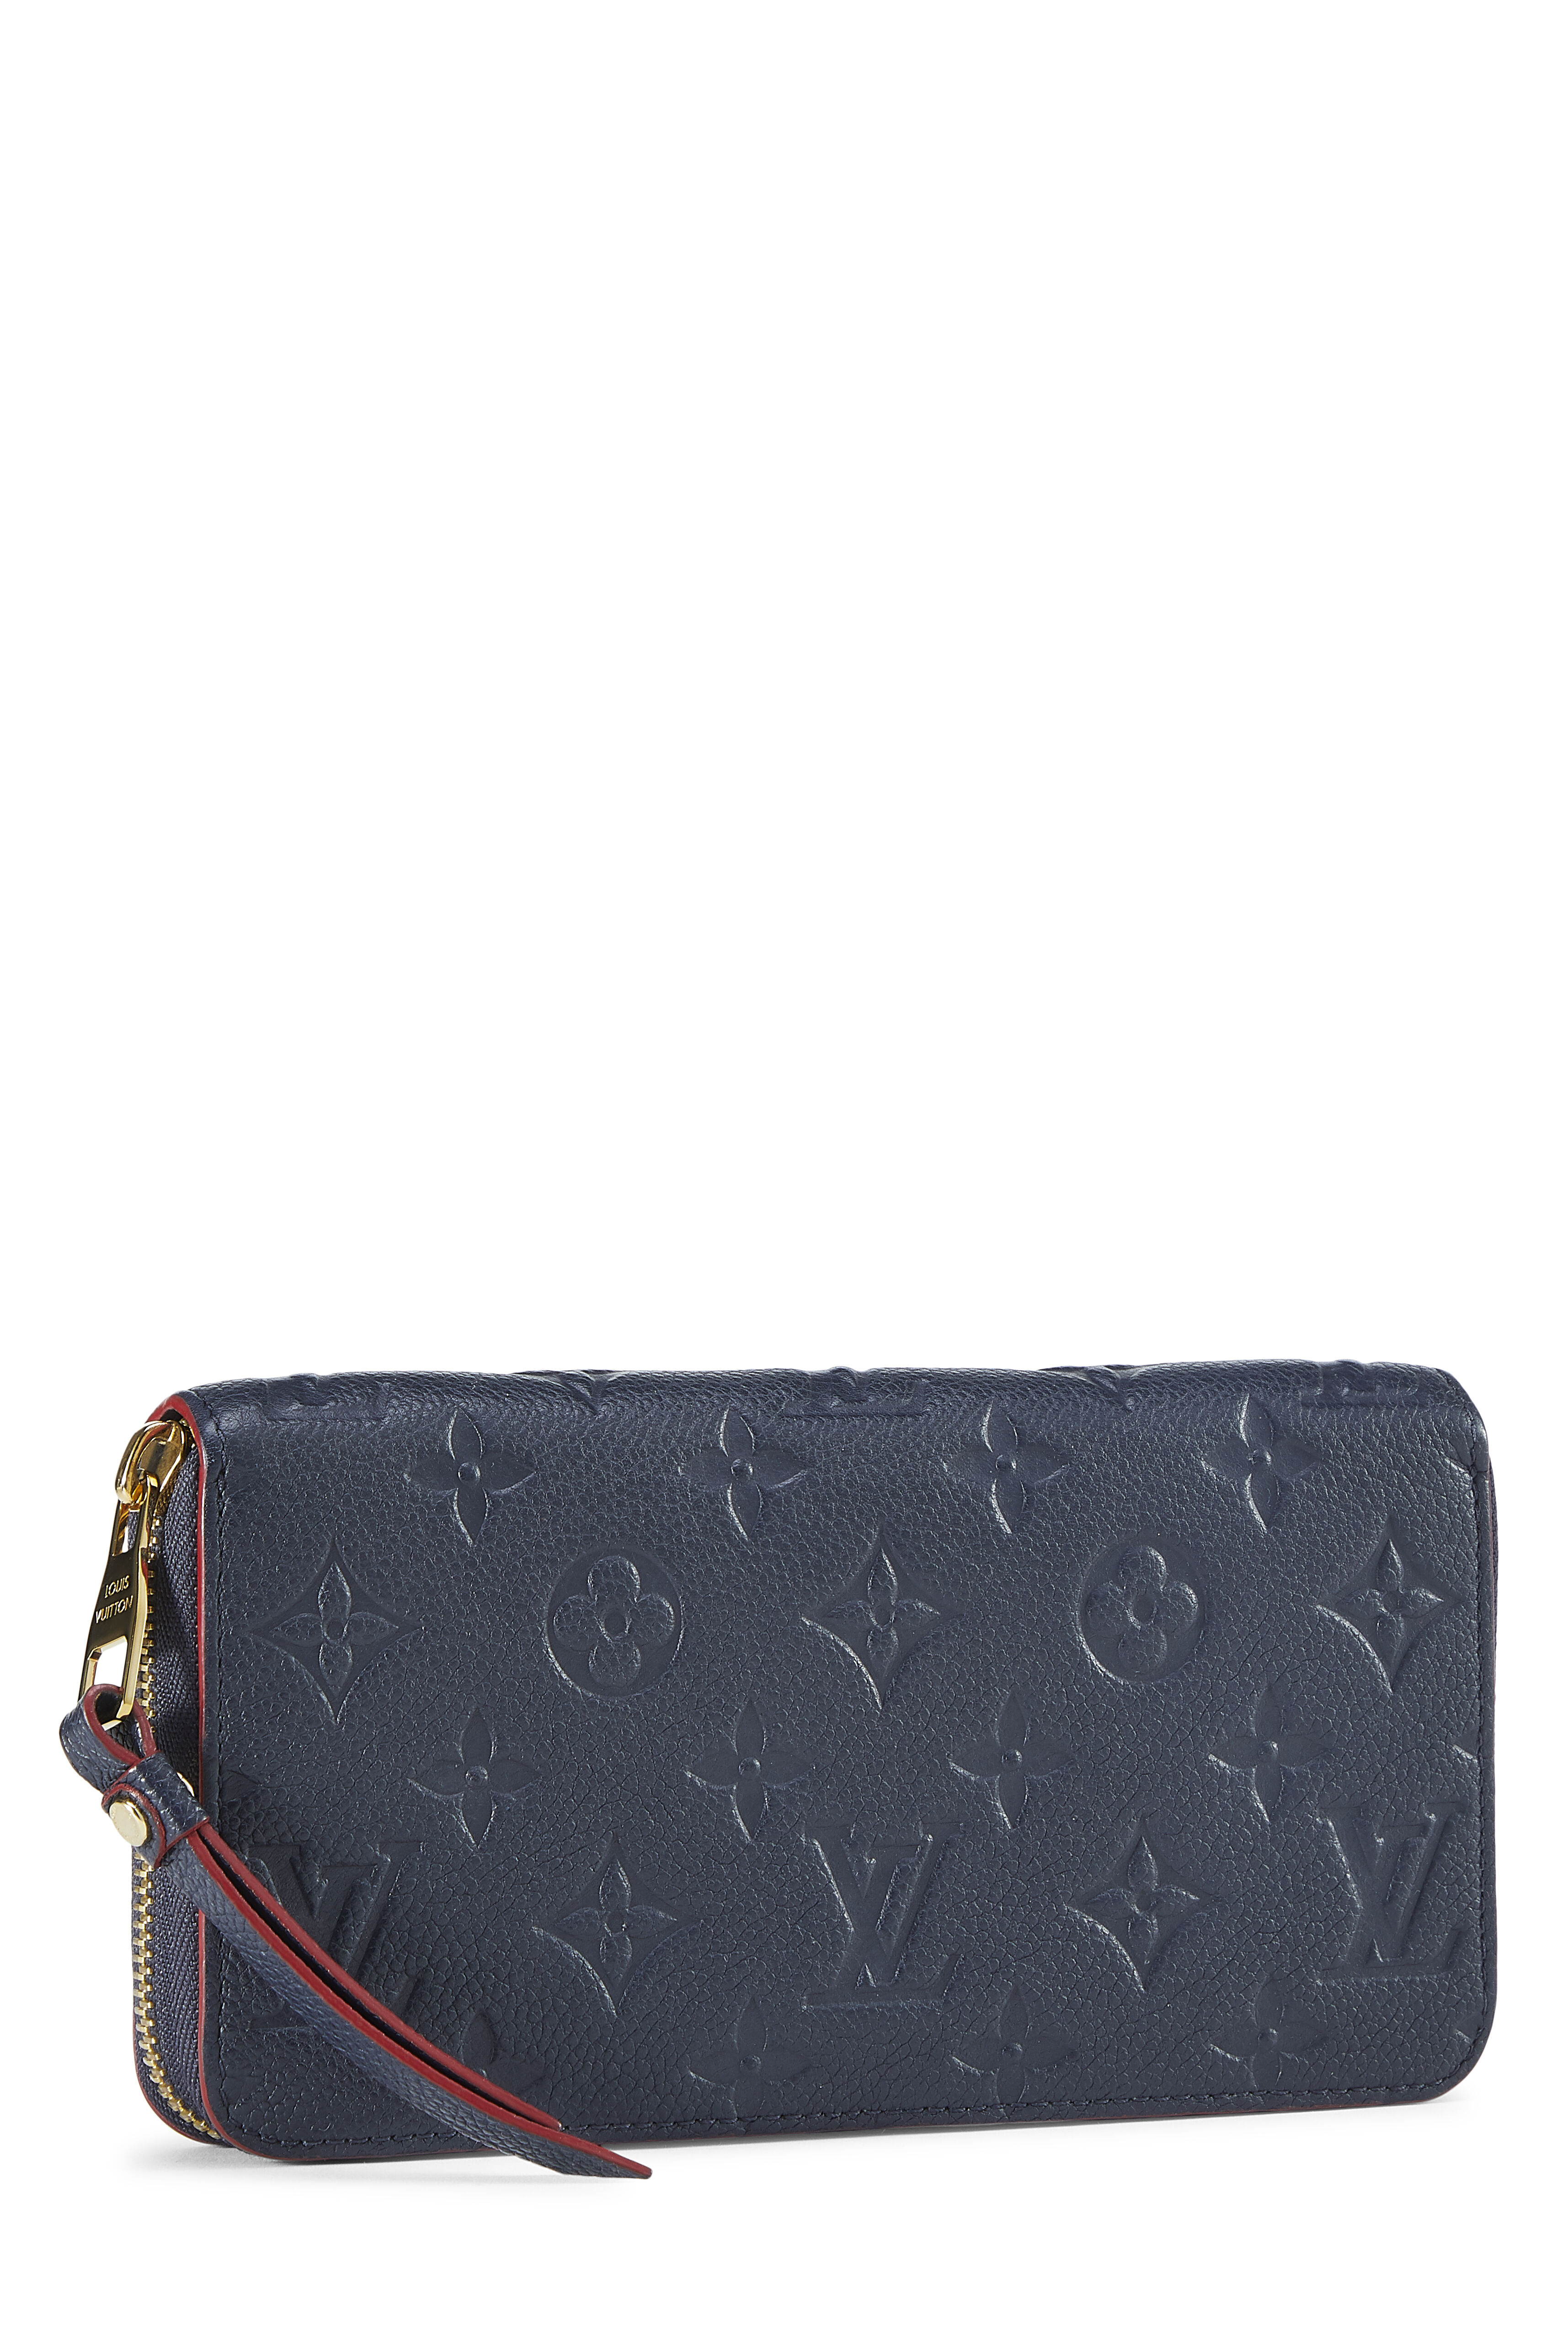 Louis Vuitton Empreinte Zippy GM Monogram Wallet LV-1029P-0001